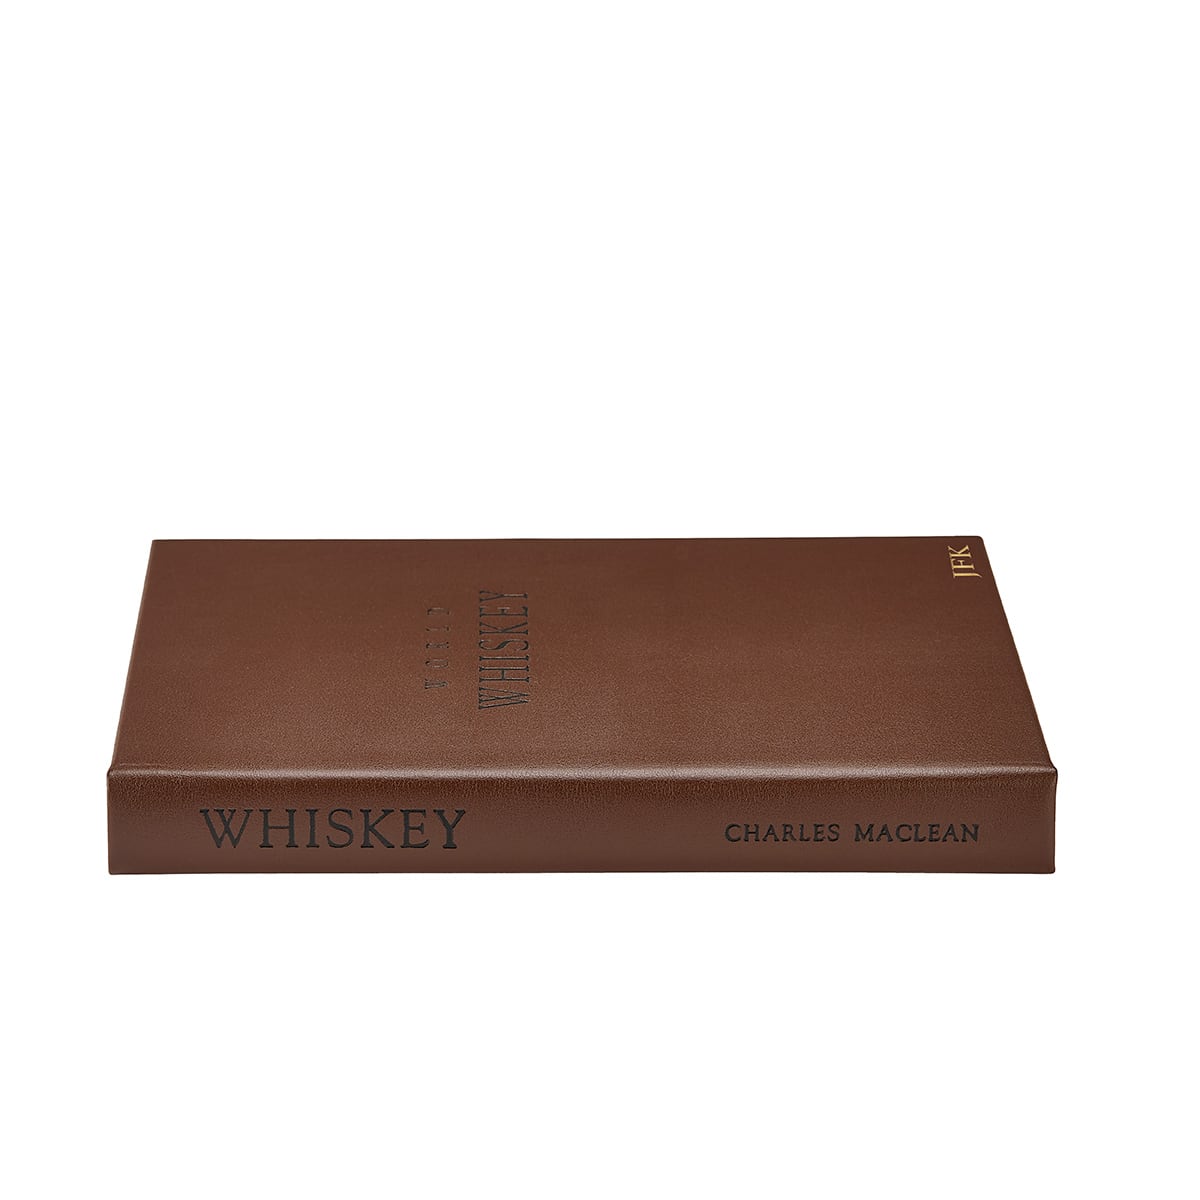 World Whiskey, Custom Brown Leather-Bound Book